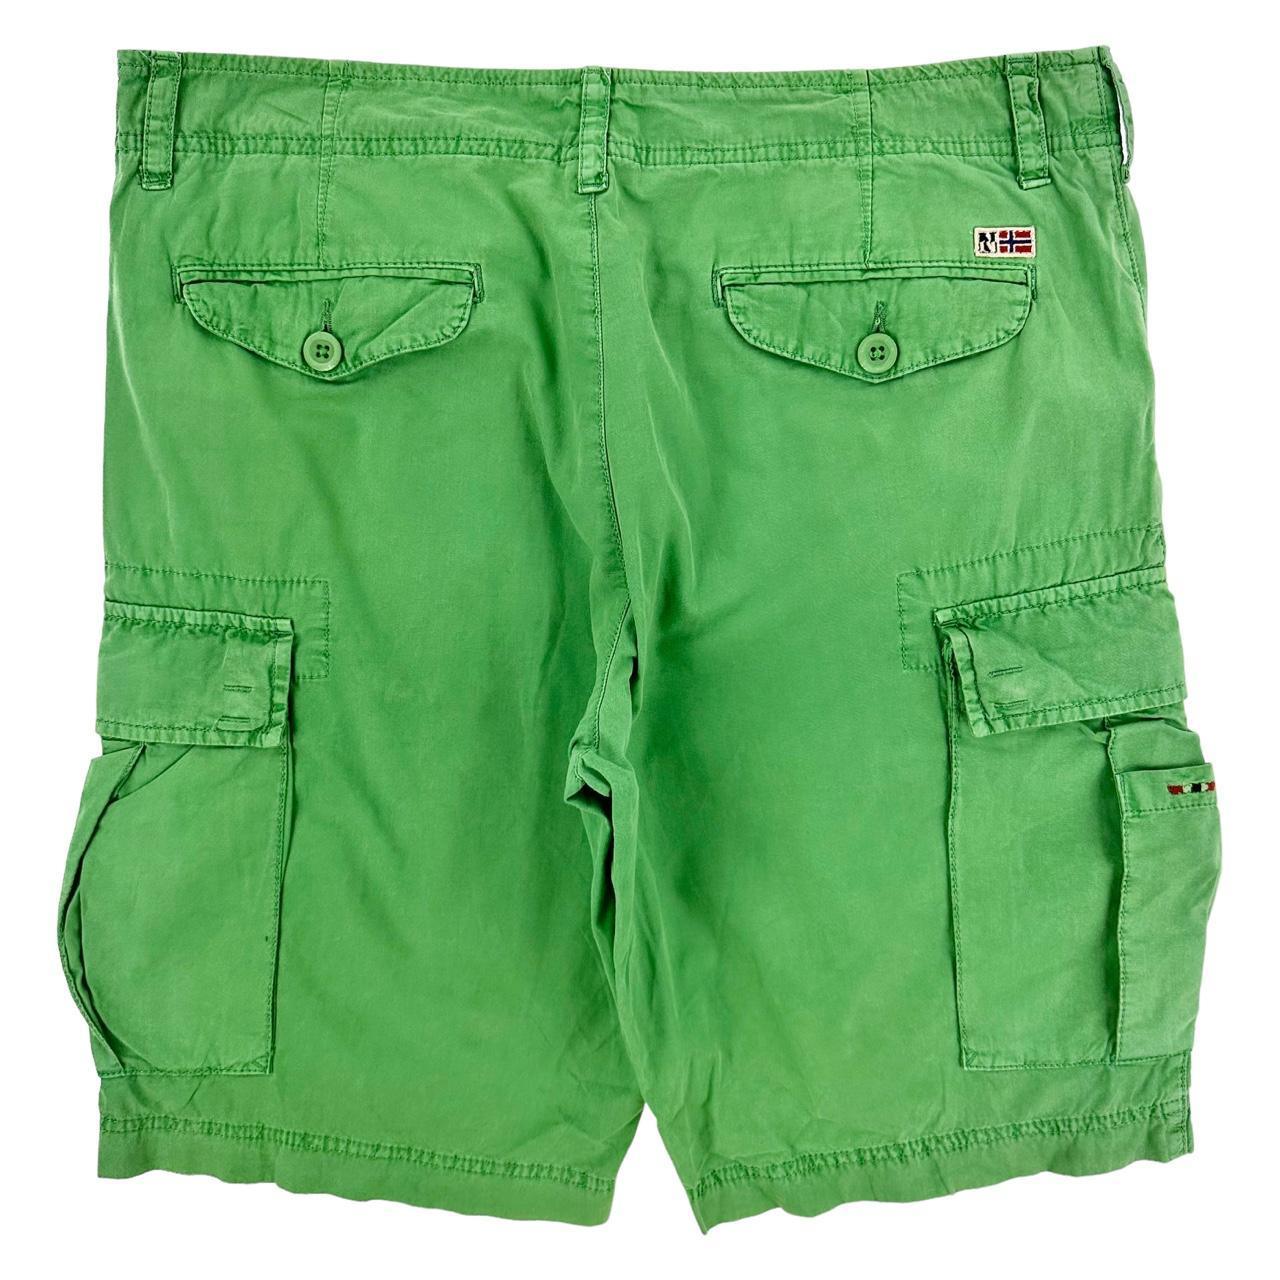 Vintage Napapijri Pocket Shorts W33 - Known Source